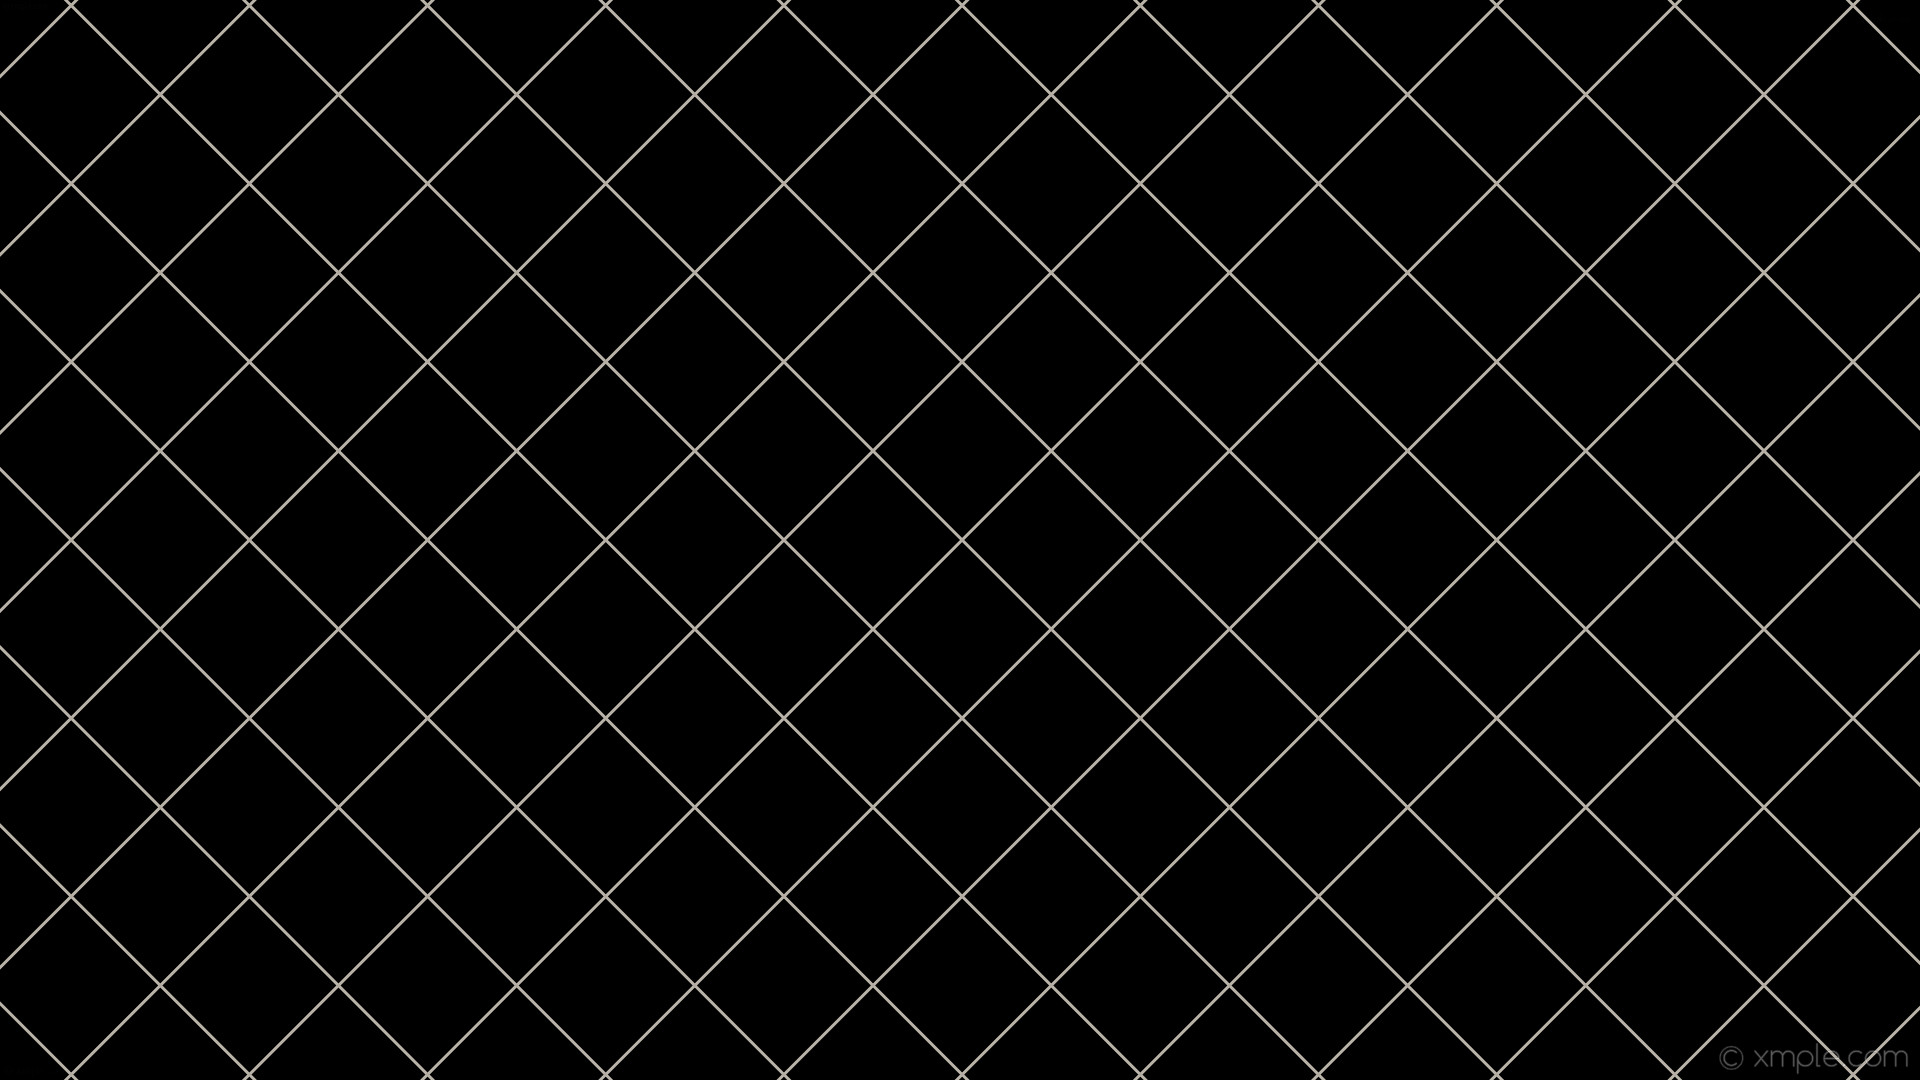 1920x1080 wallpaper graph paper black white grid old lace #000000 #fdf5e6 45Â° 3px  126px